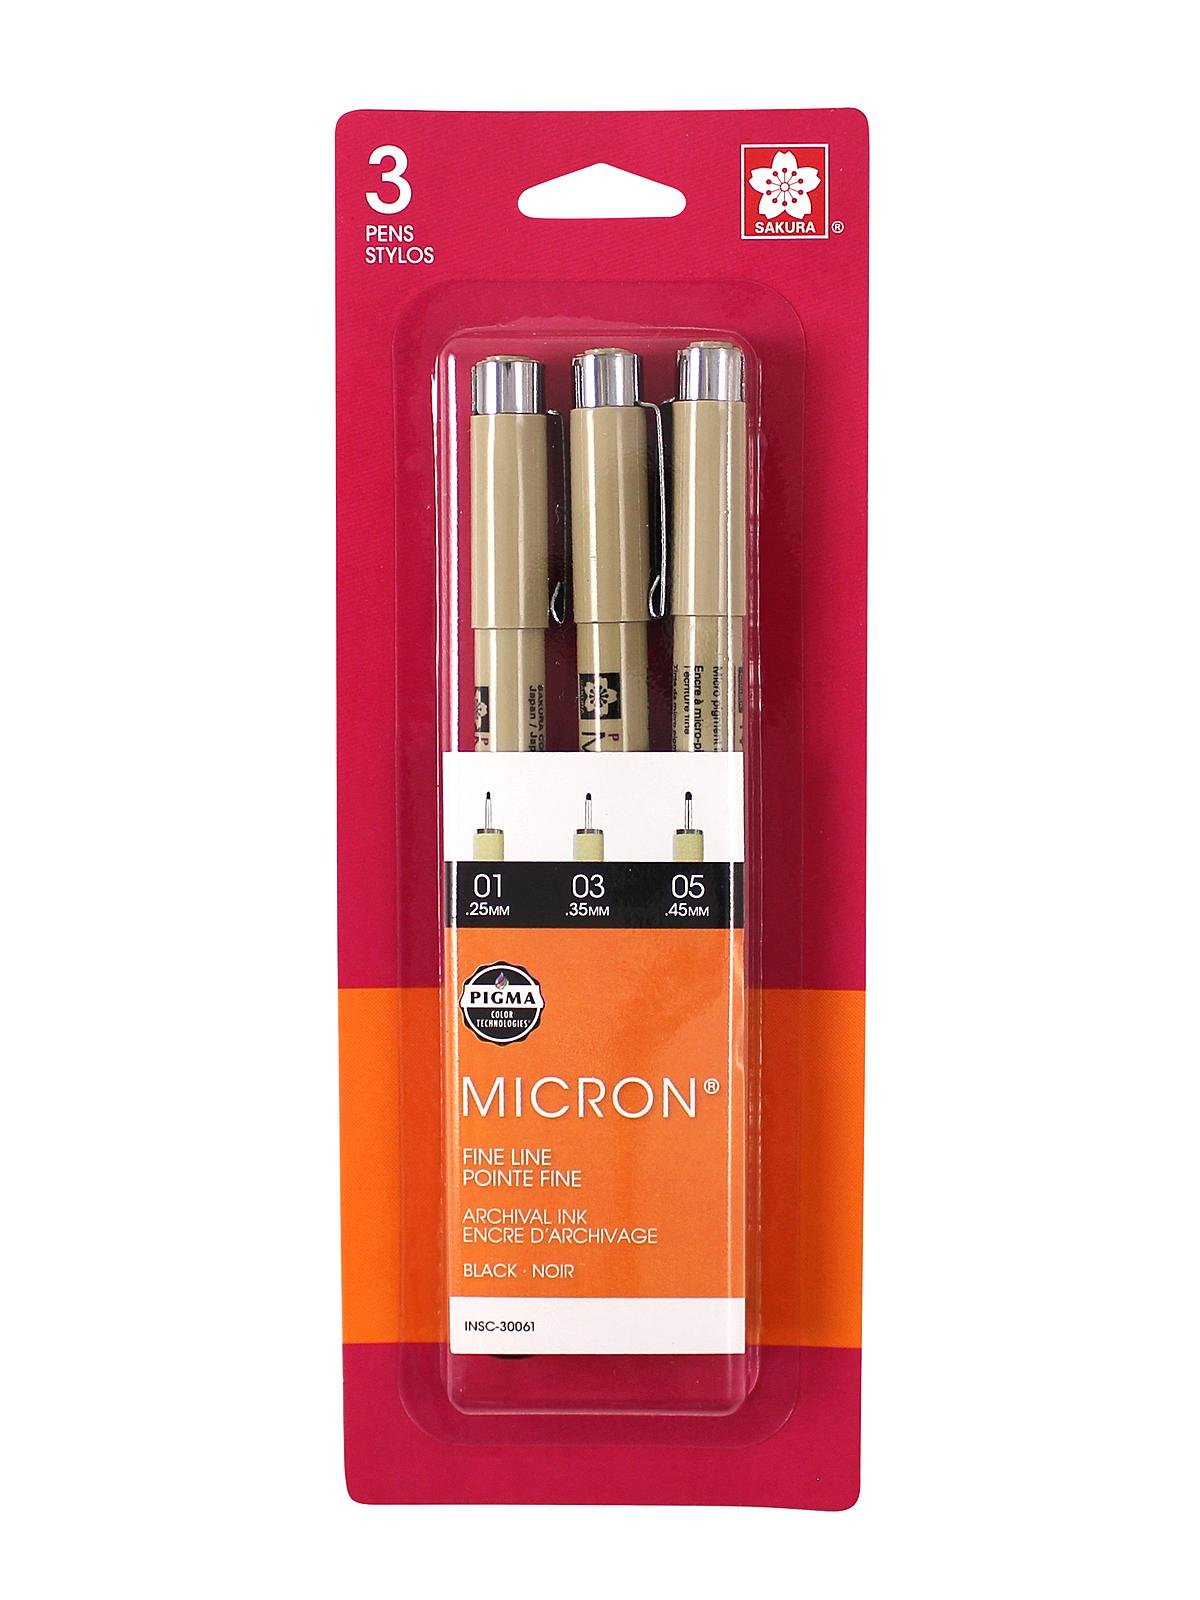 Pigma Micron 01 6-pen Set Assorted